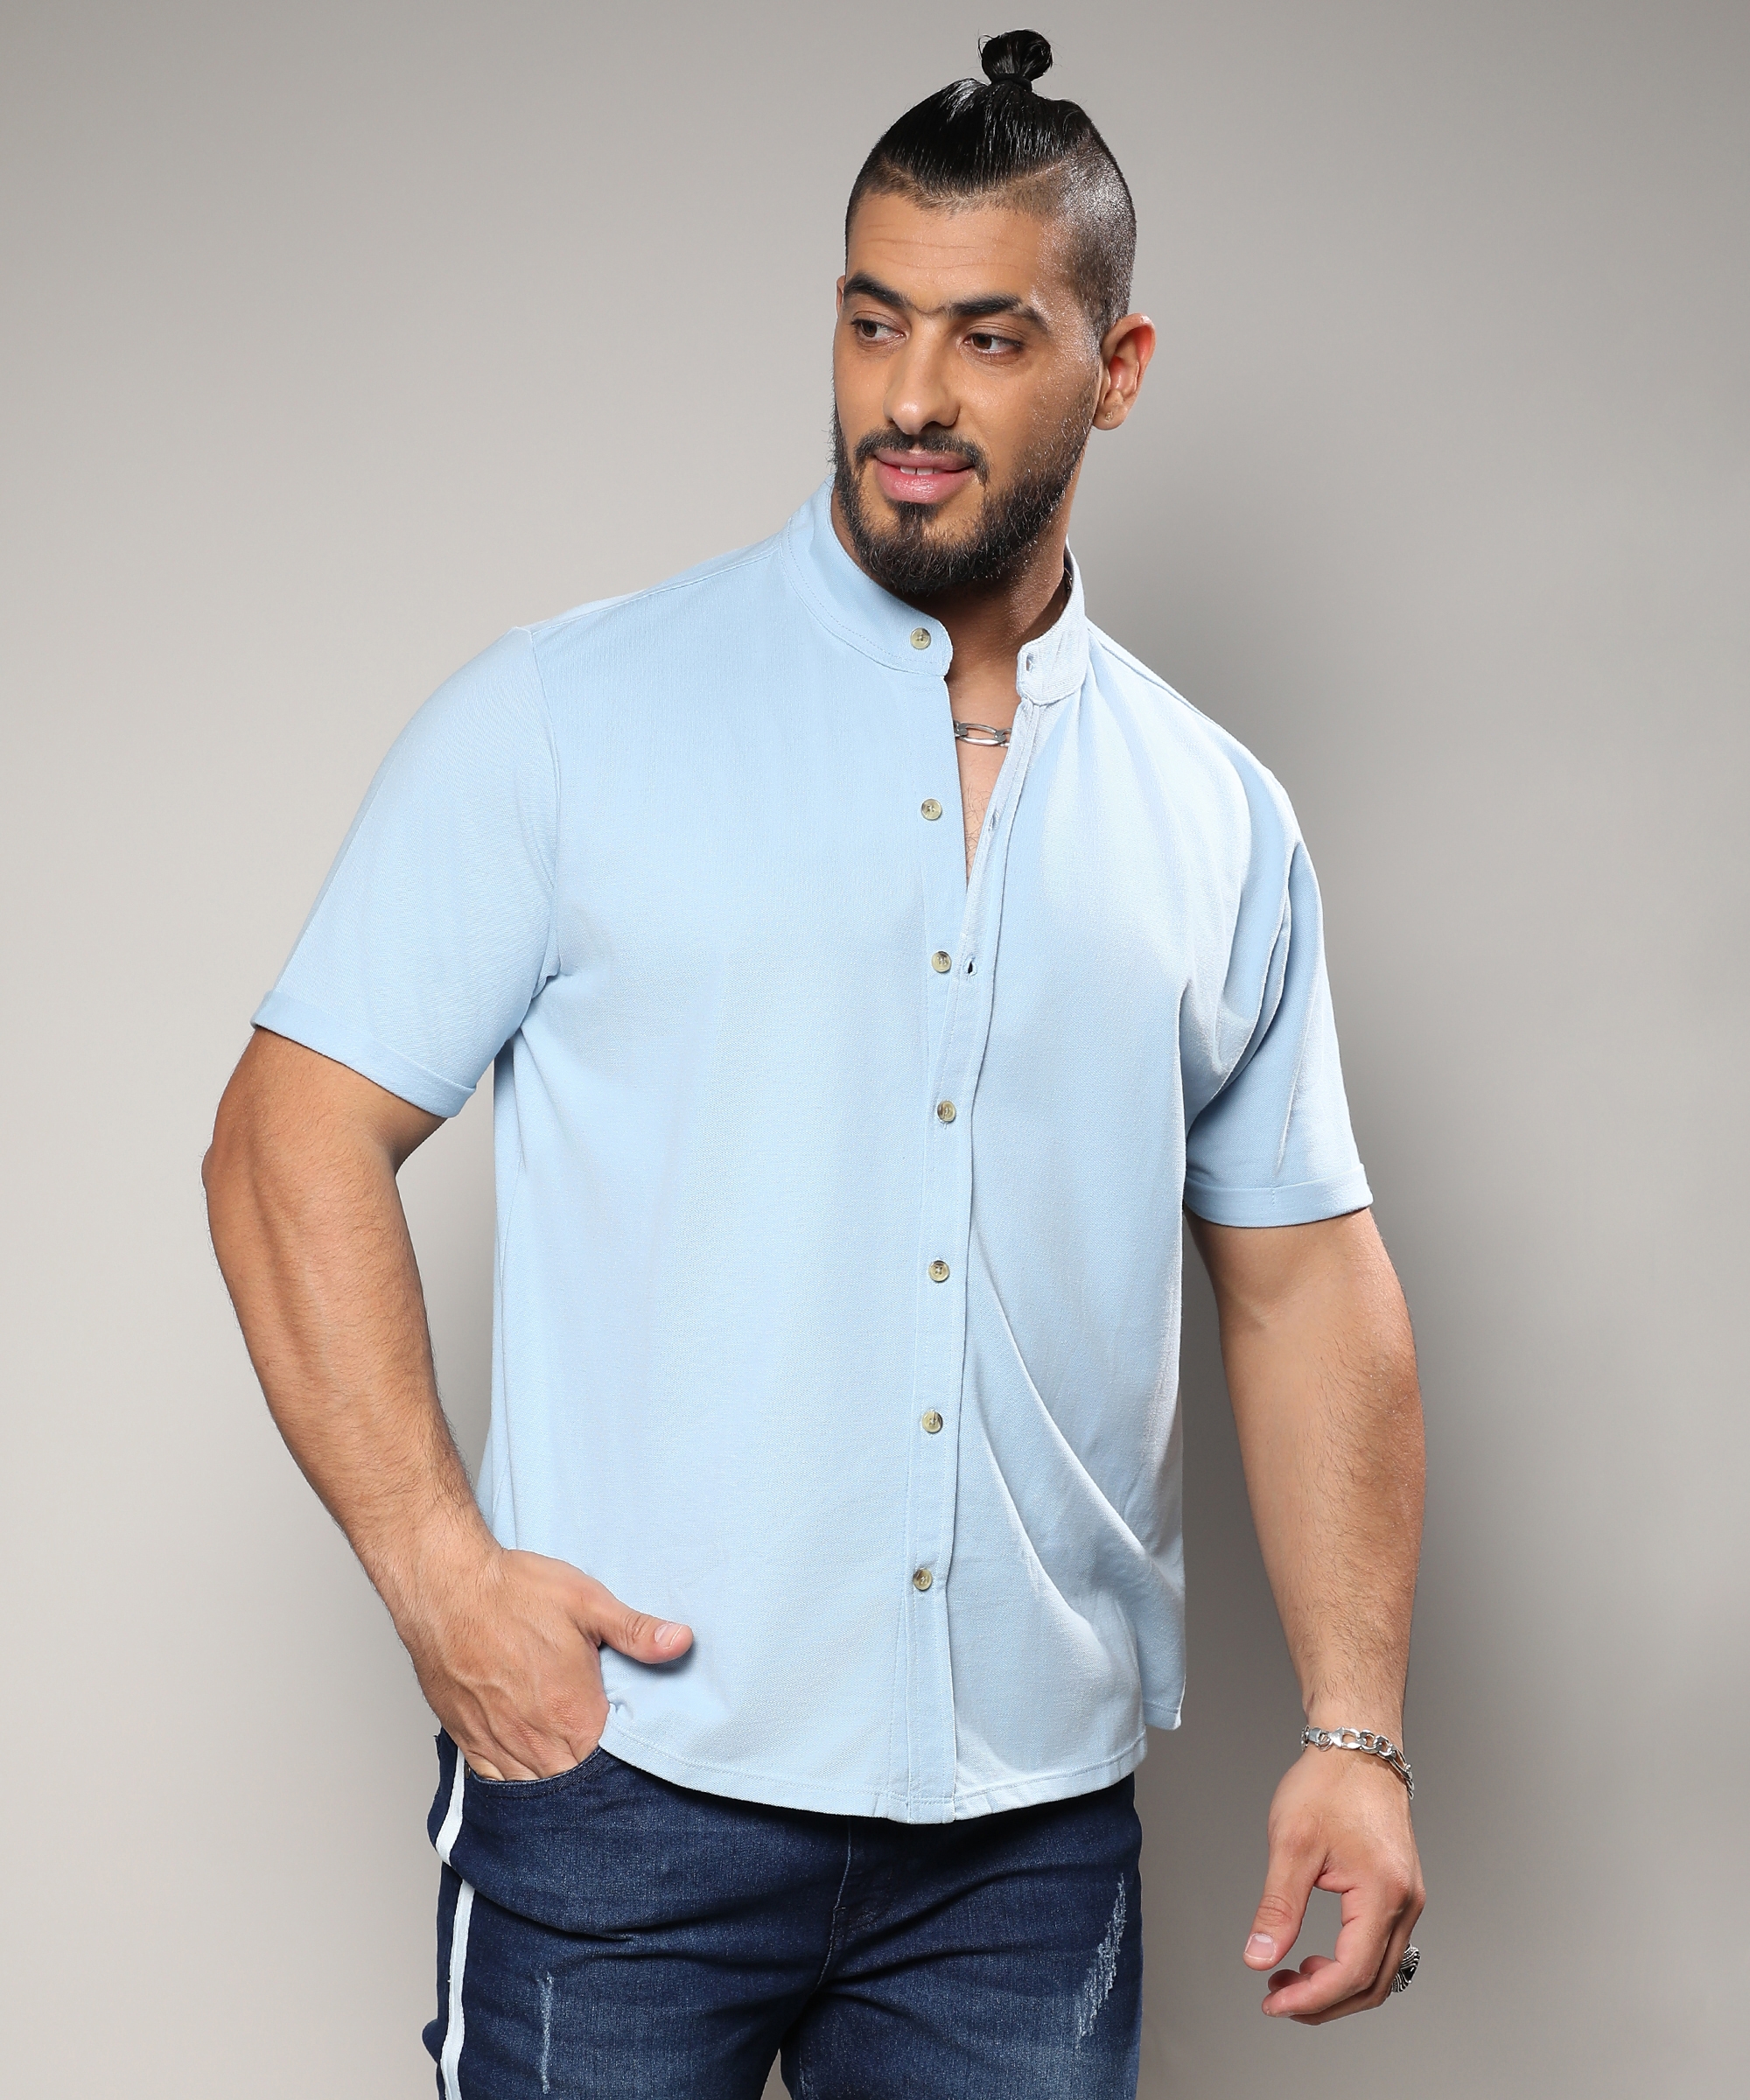 Instafab Plus | Men's Baby Blue Basic Button-Up Shirt